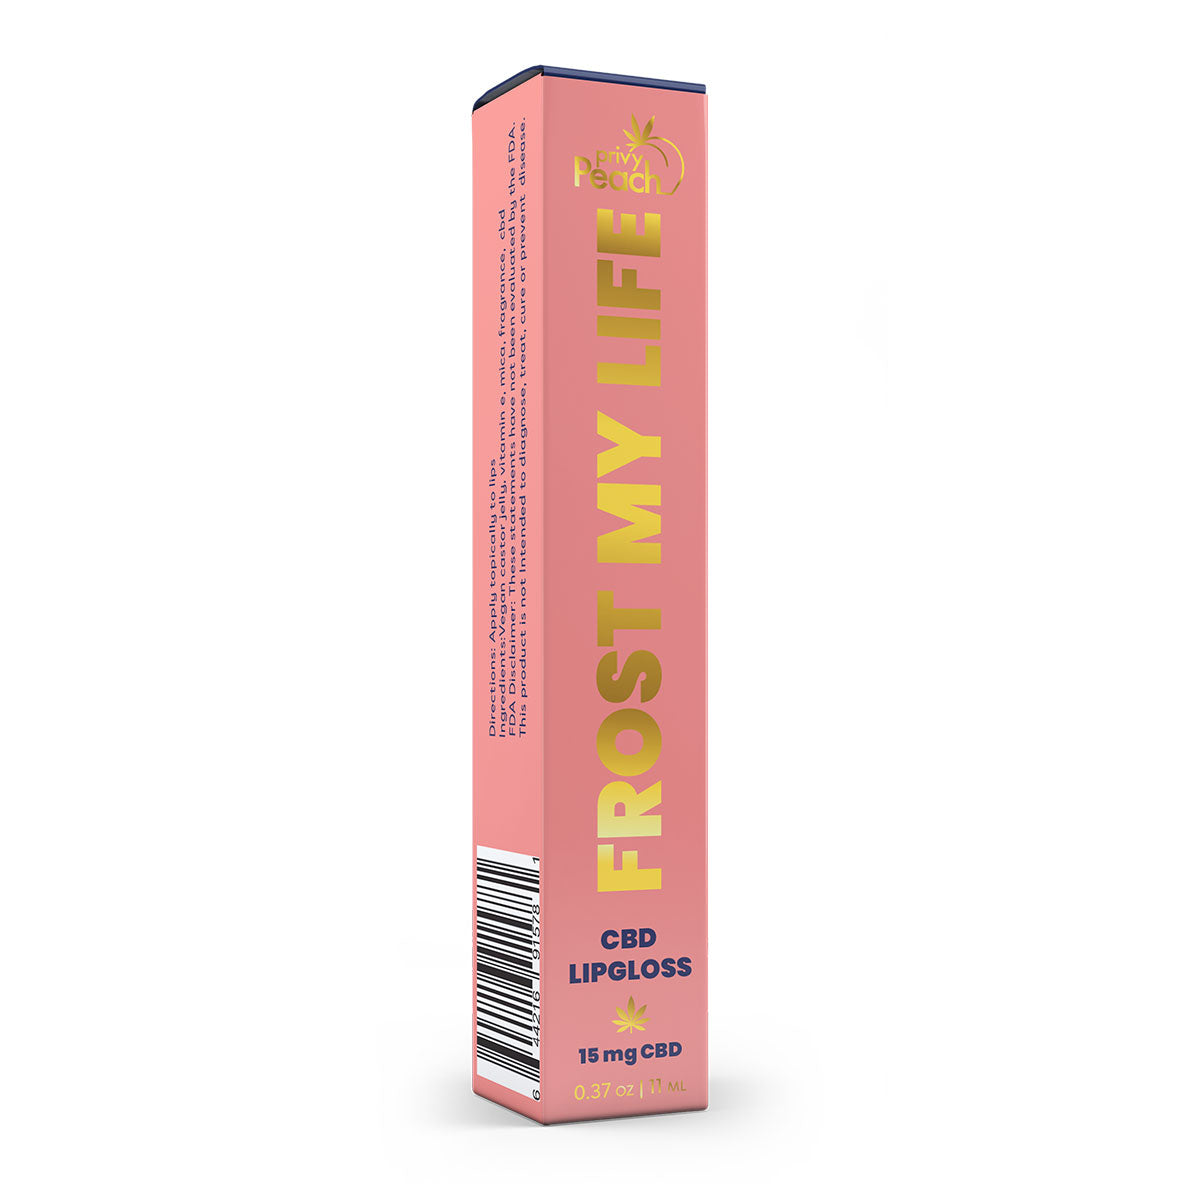 Privy Peach Lip Gloss 11ml (15mg CBD) - Assorted Flavors